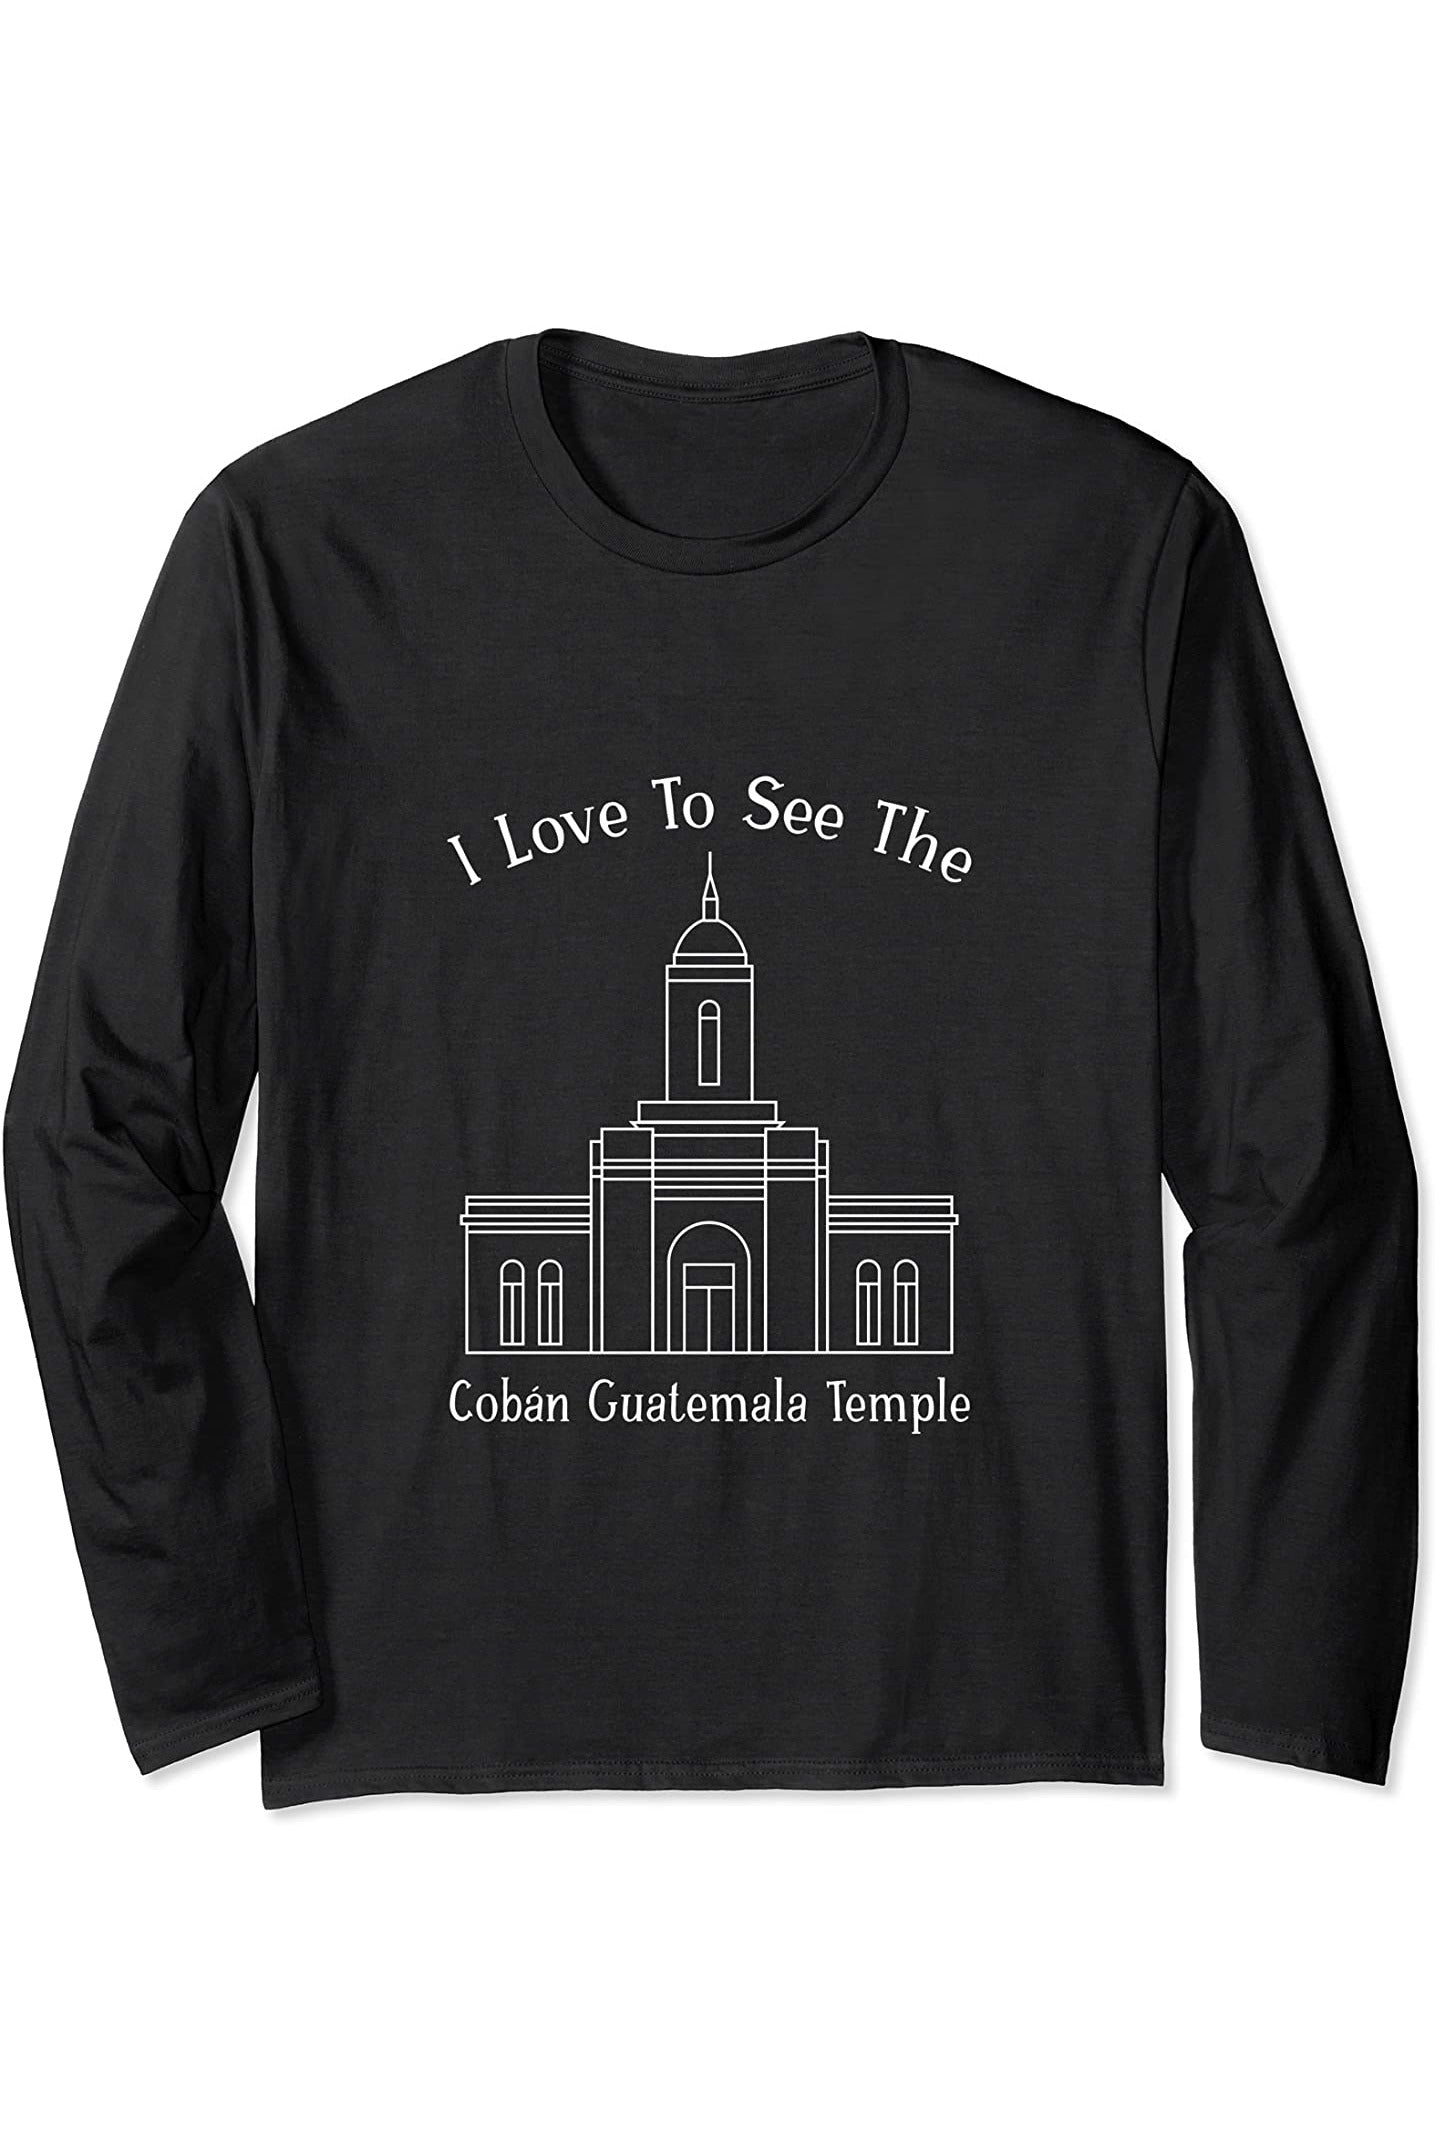 Coban Guatemala Temple Long Sleeve T-Shirt - Happy Style (English) US